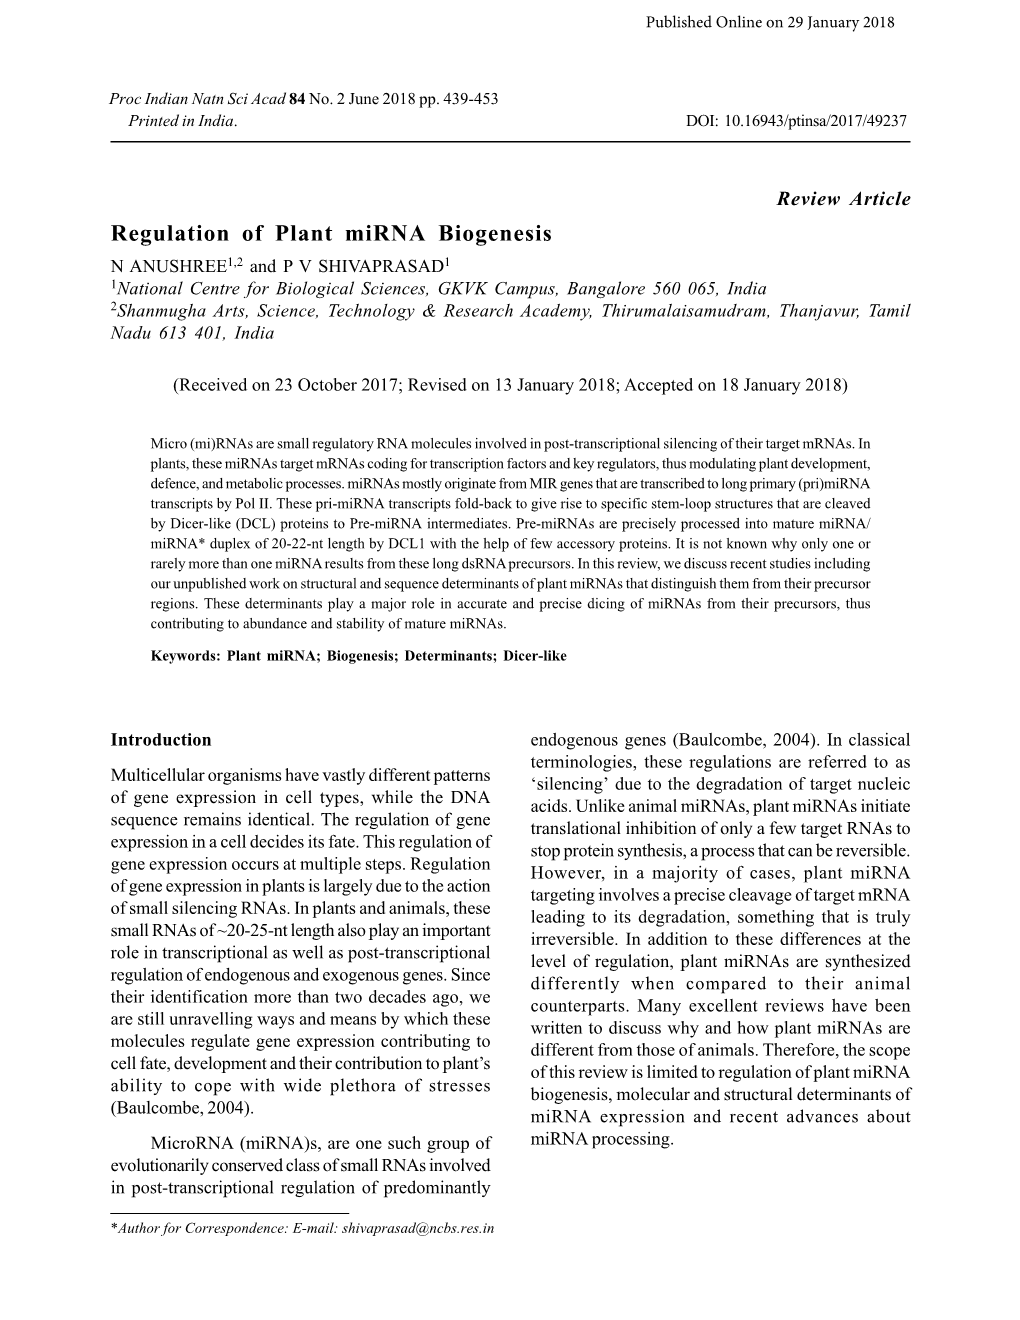 Regulation of Plant Mirna Biogenesis